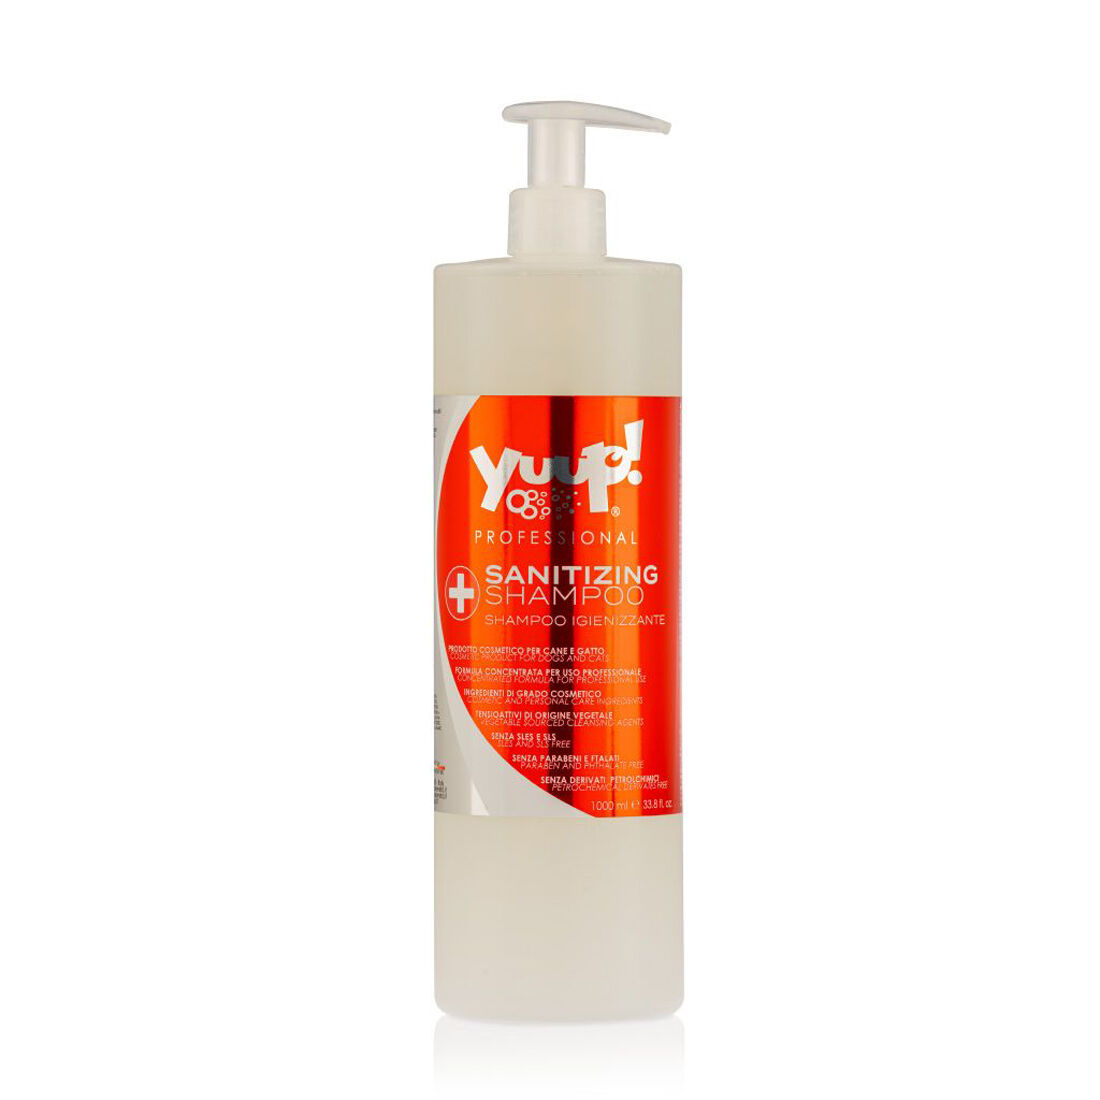 Yuup! Professional Shampoo desinfizierend "Sanitizing Shampoo"